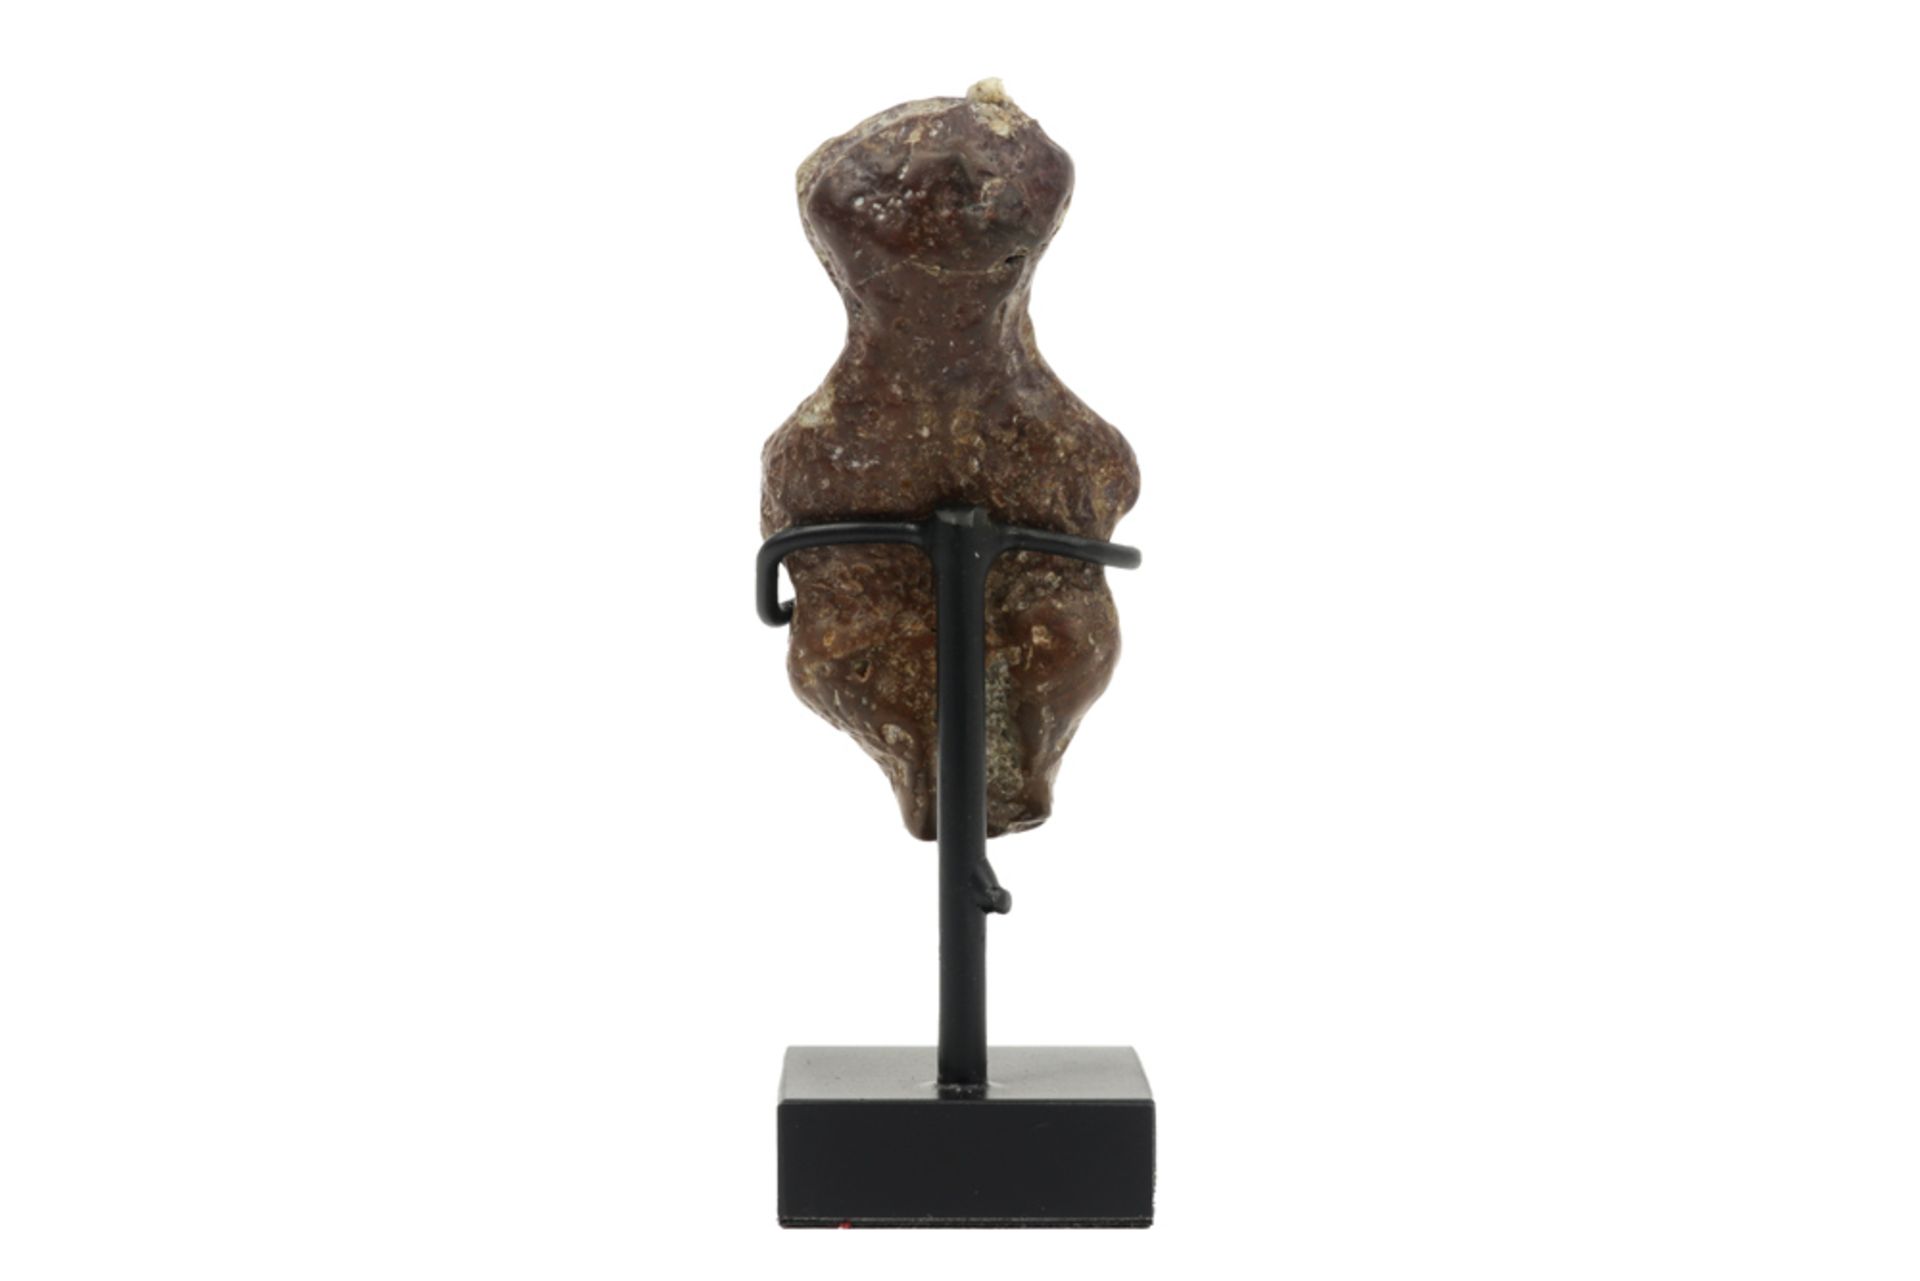 Donau Culture fertilty idol in stone (maybe flint) || DONAU - CULTUUR vrouwelijk - Image 3 of 3